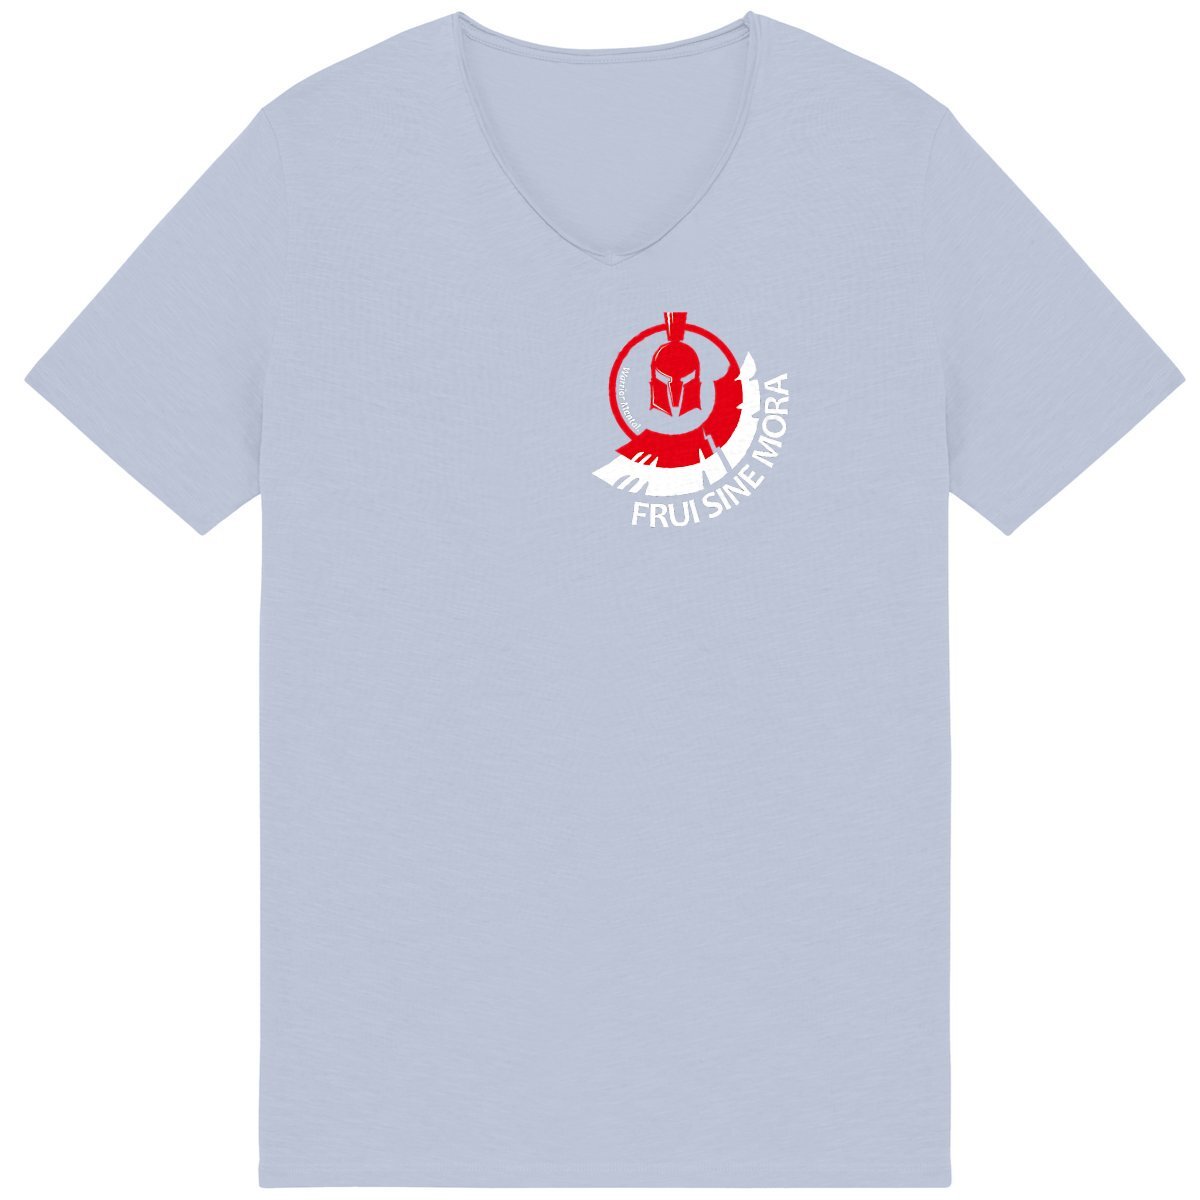 IMAGINER T-shirt Unisexe Aspect Vieilli Logo Delta - FRUI SINE MORA